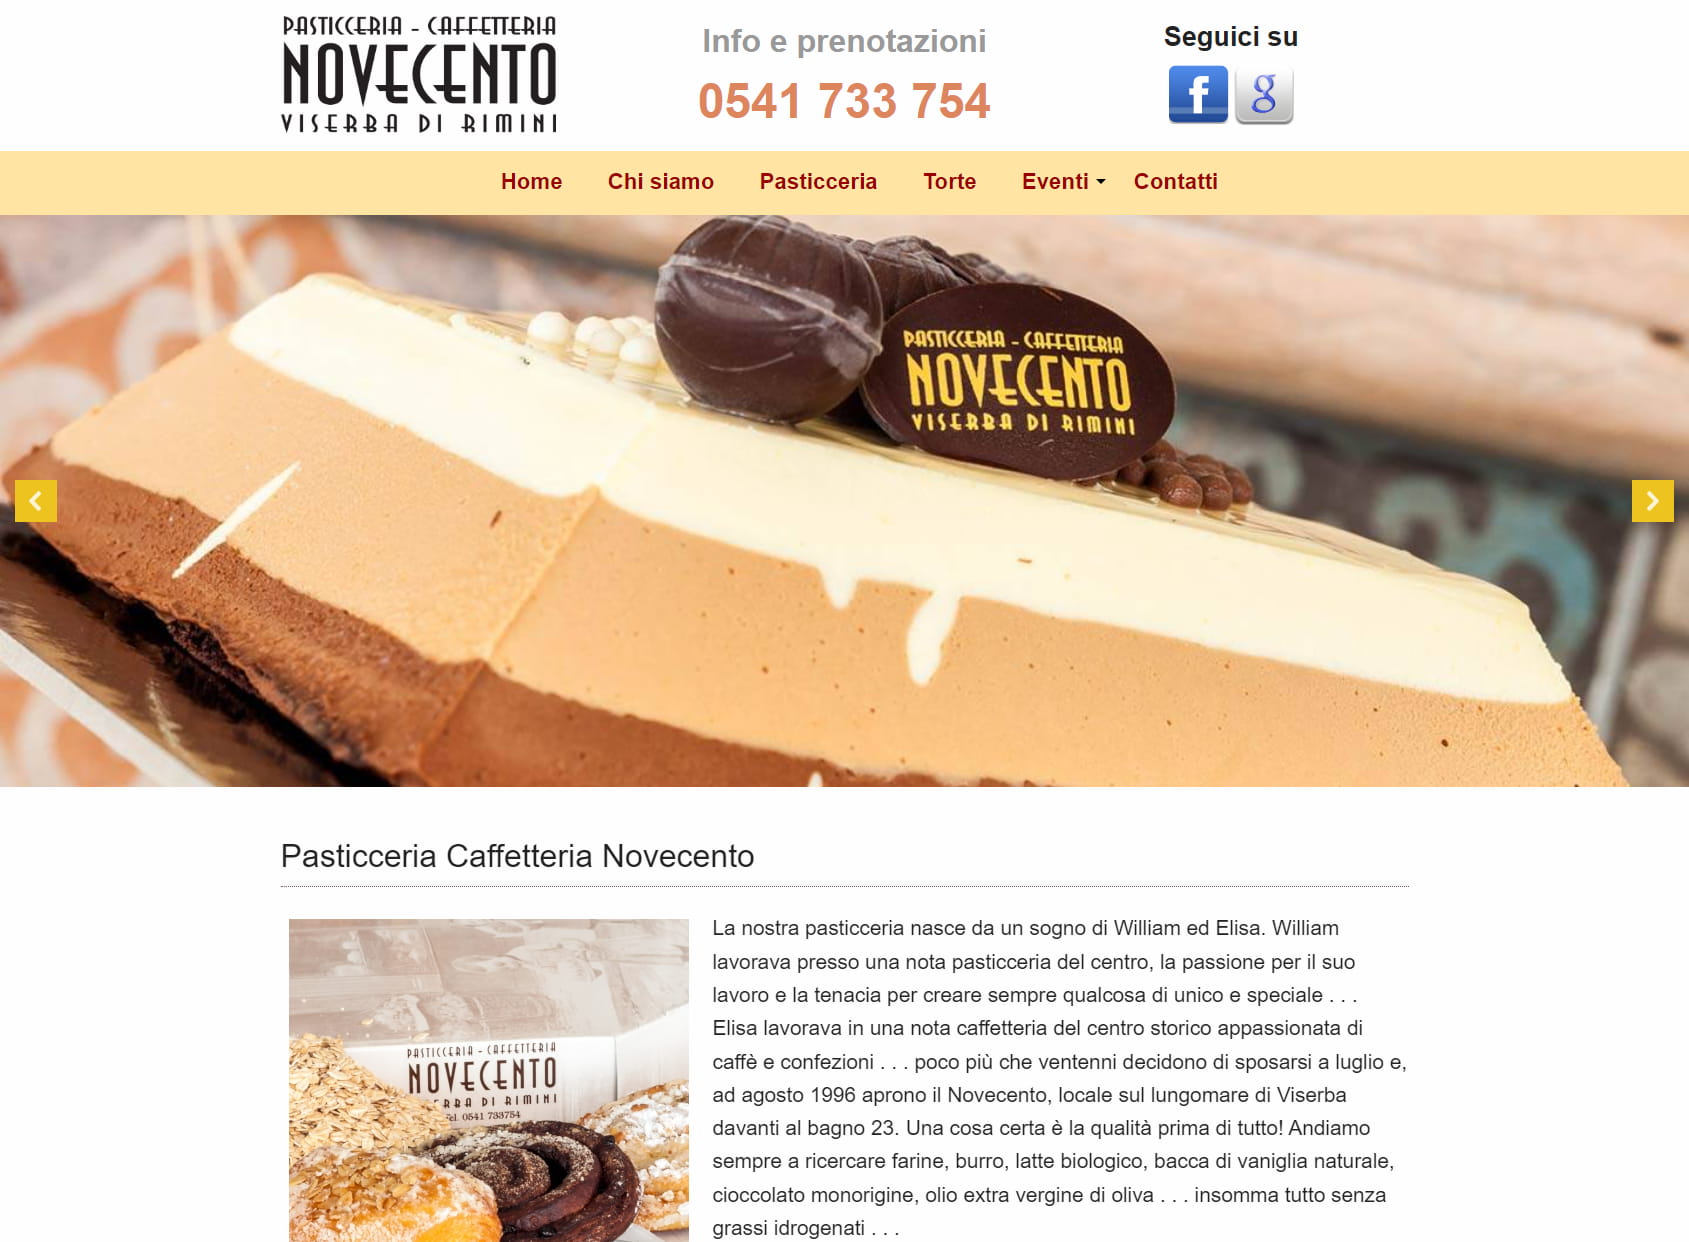 Pastry Cafe Novecento